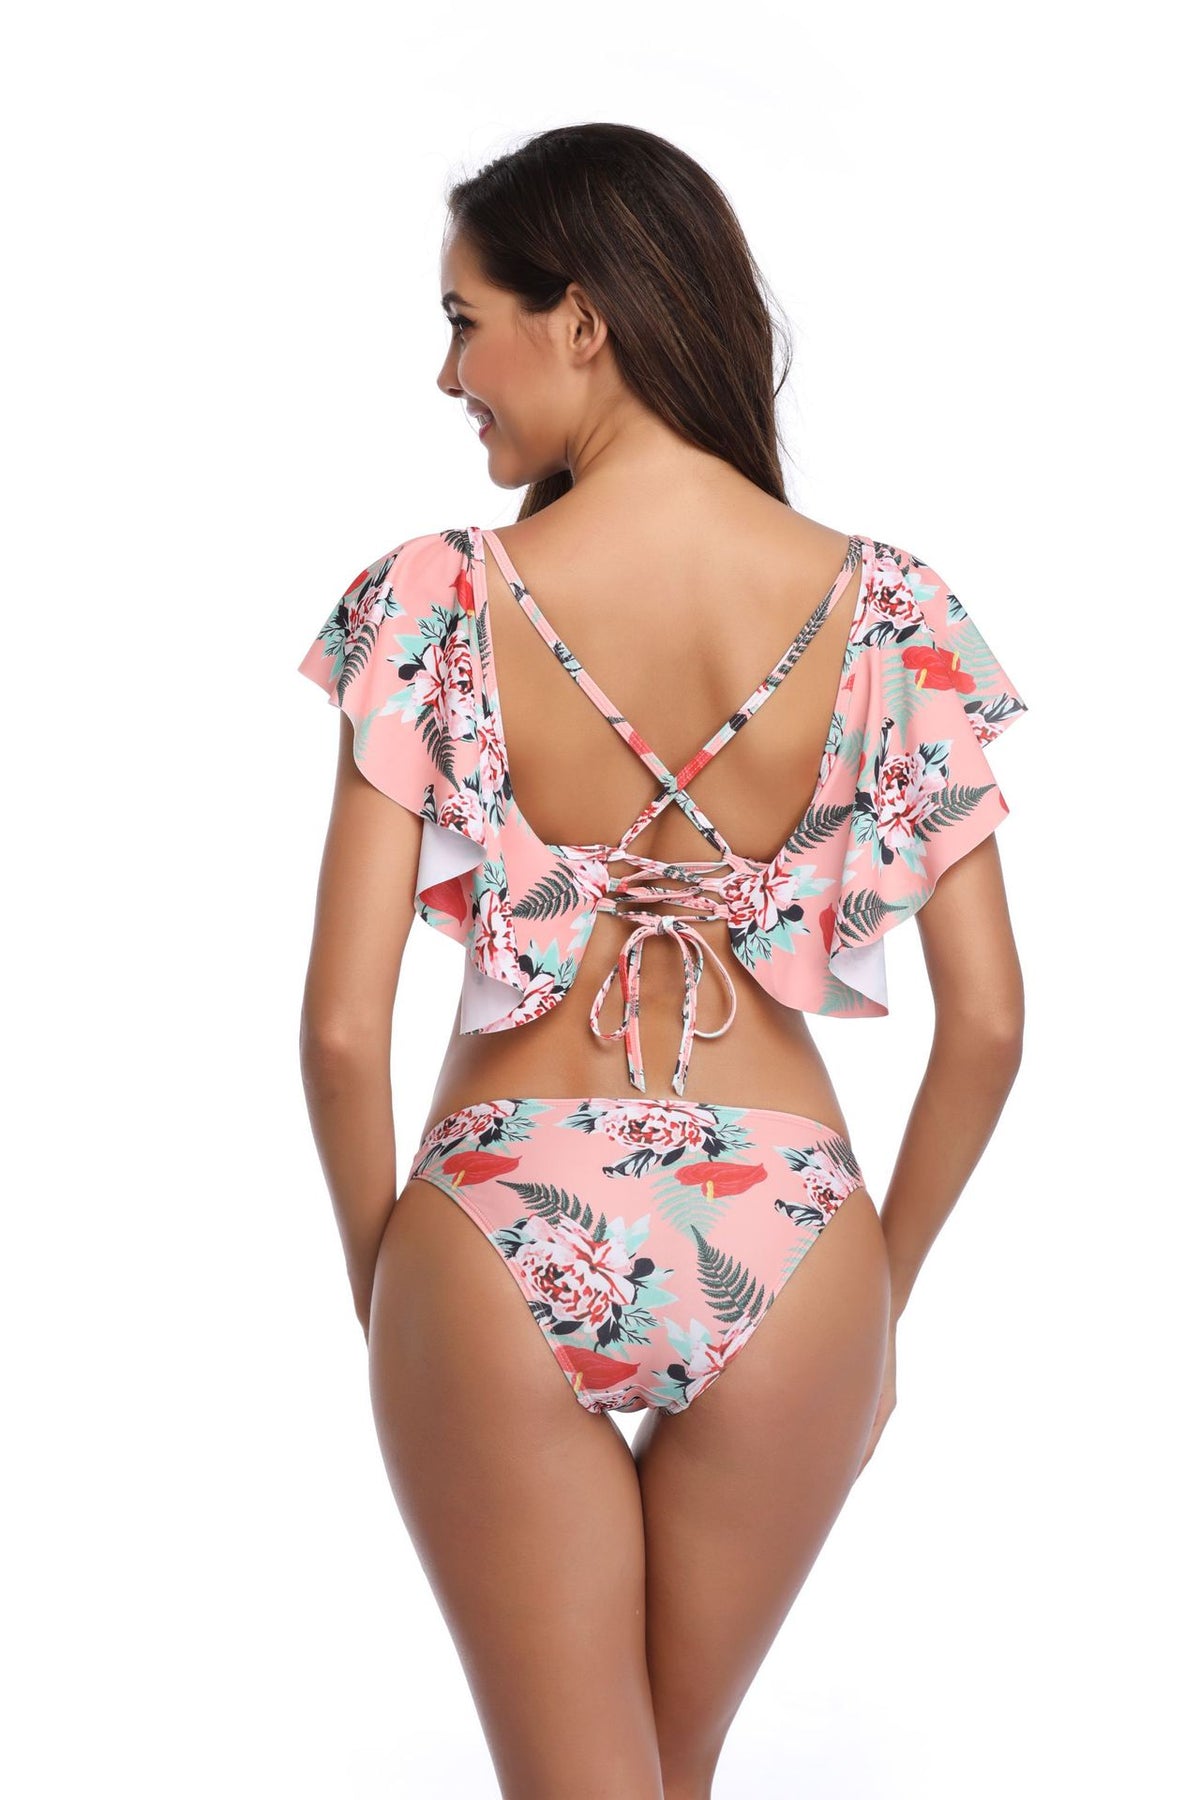 Riviera Blossom Split Bikini - StylinArts